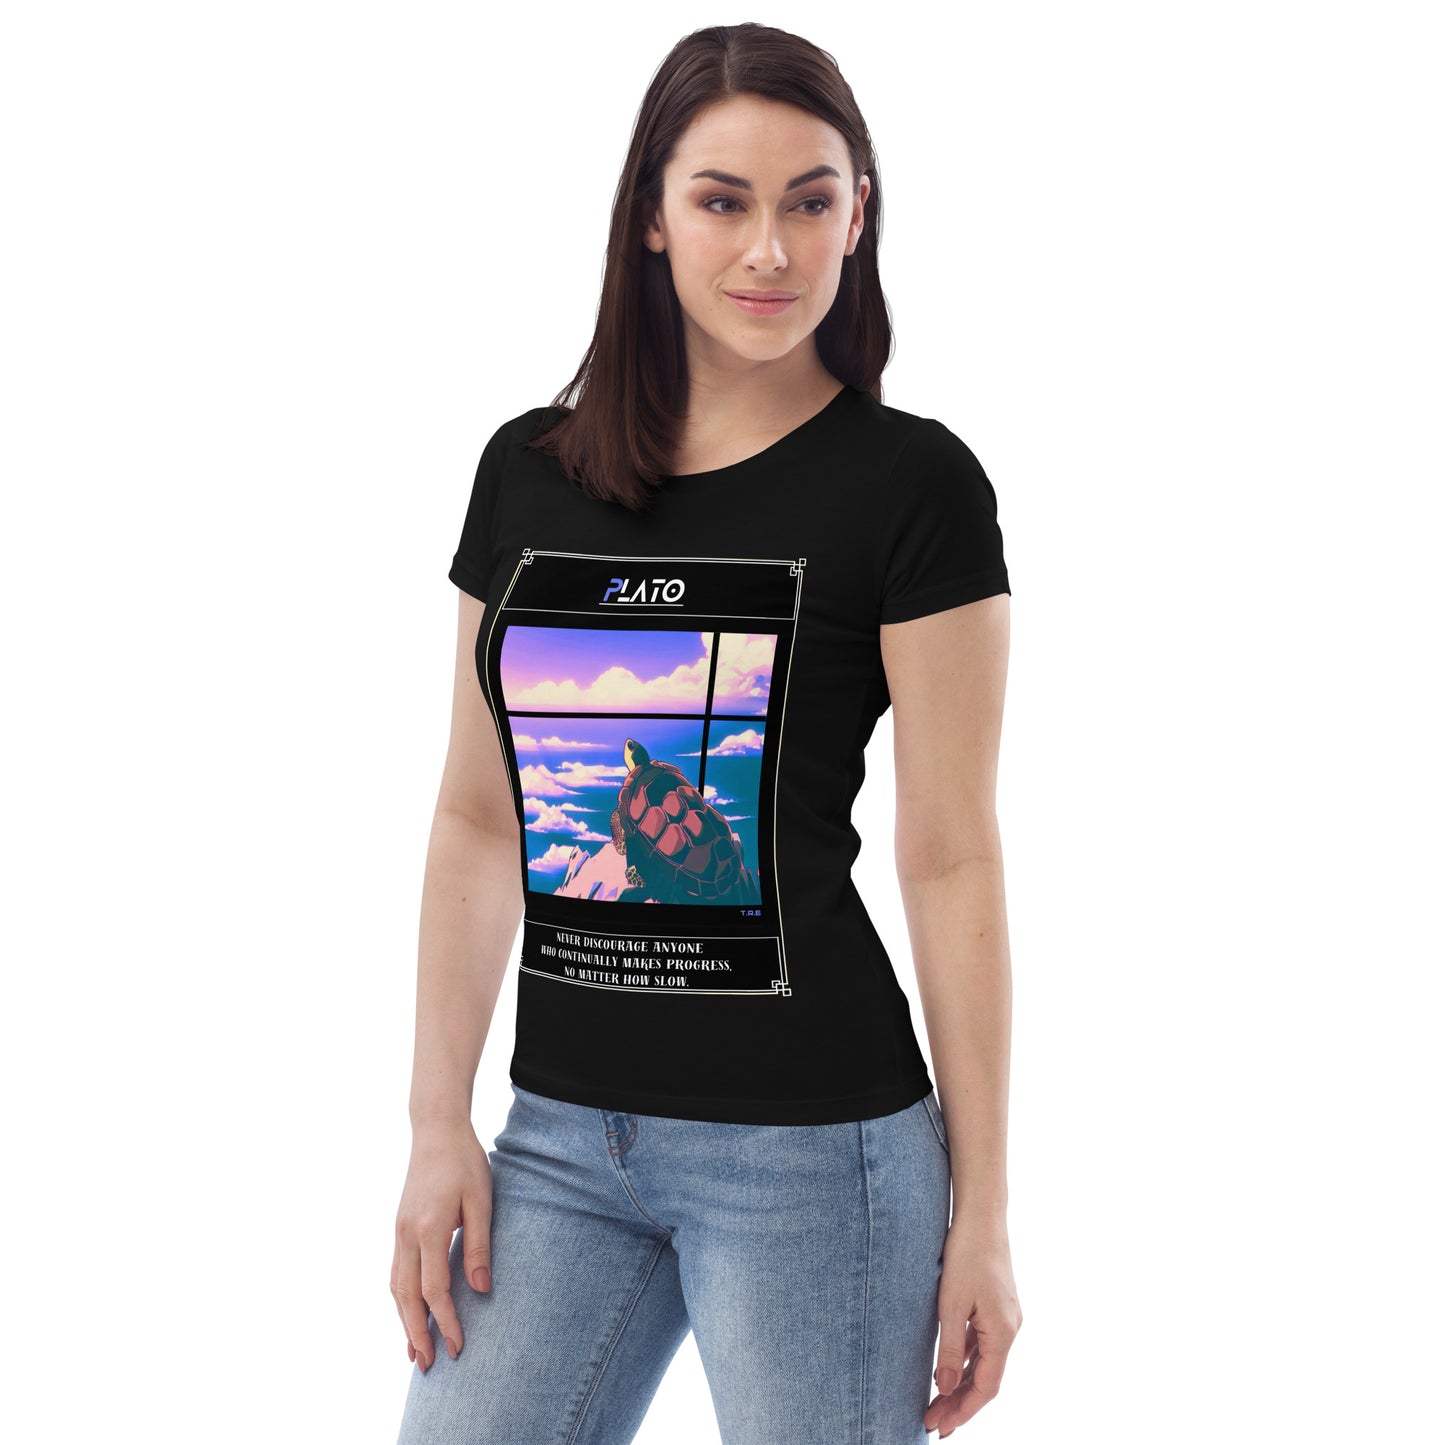 Women's Premium T-Shirt - Plato